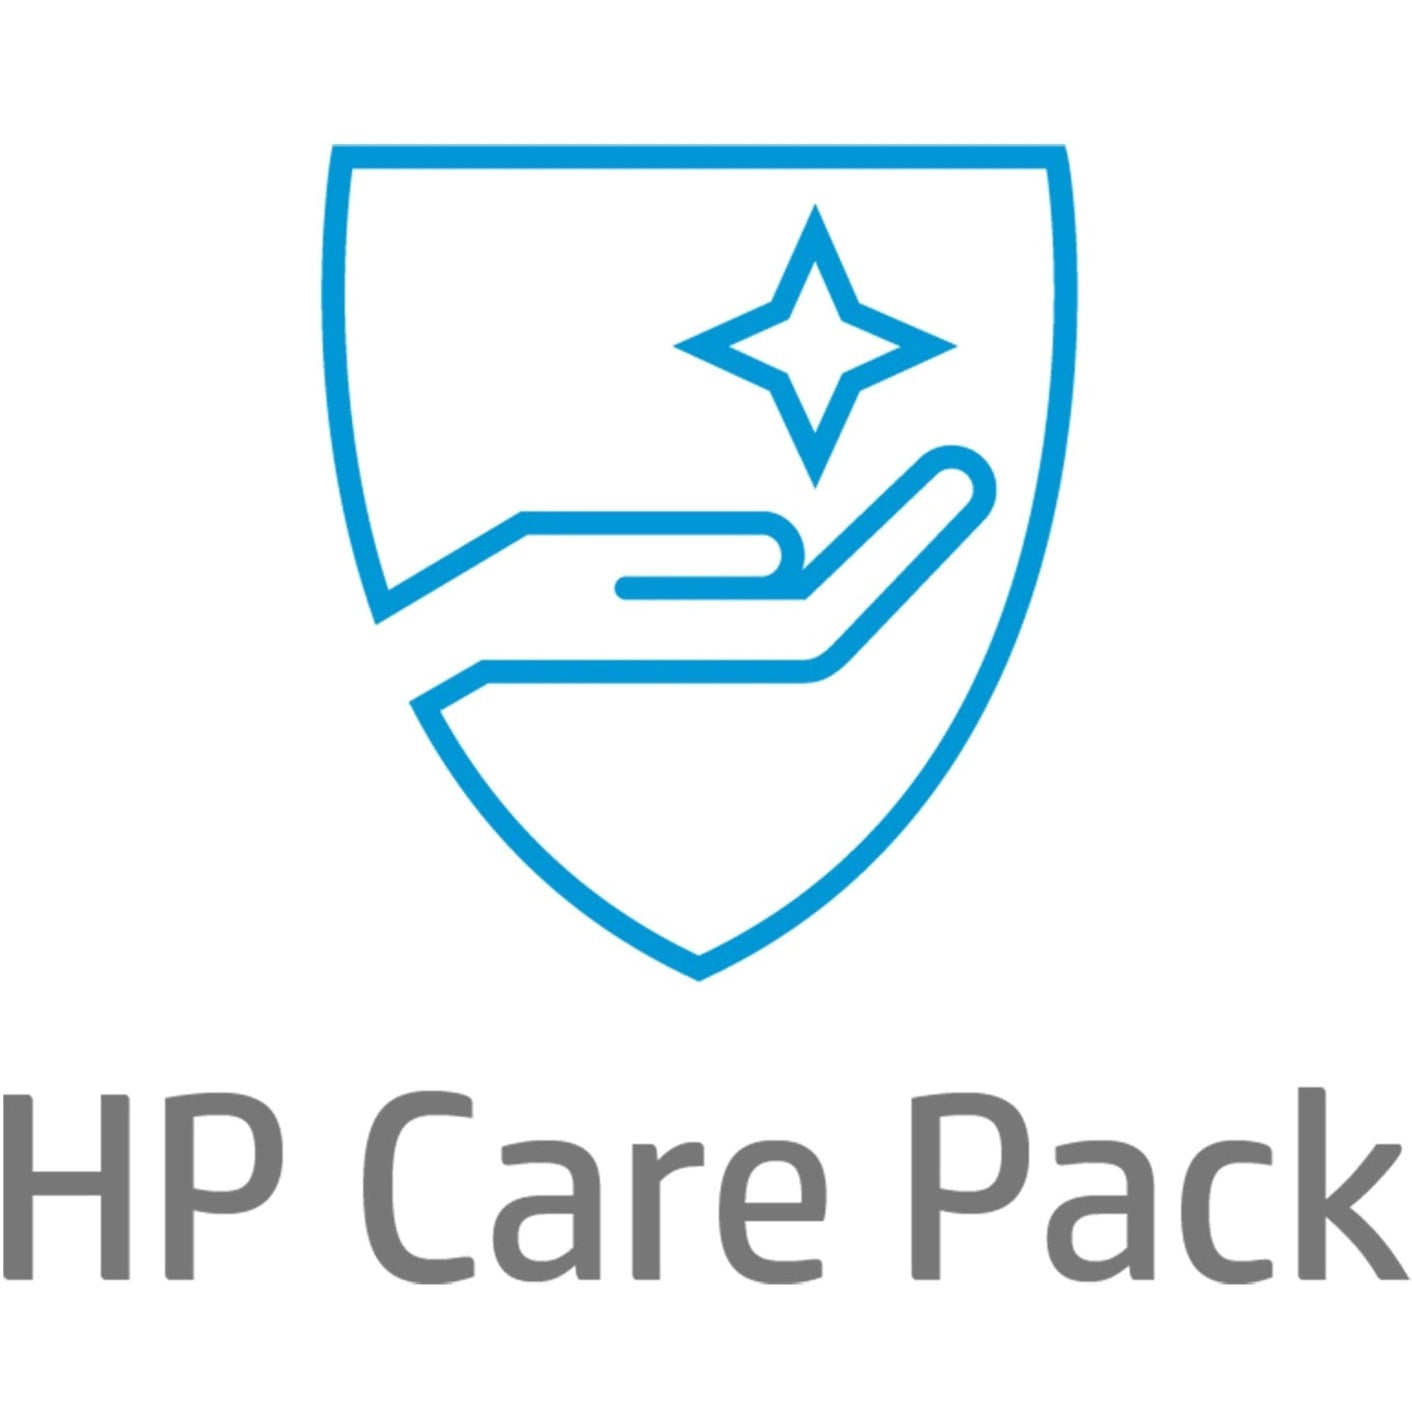 HP Care Pack - 4 Year - Service (UL847E)